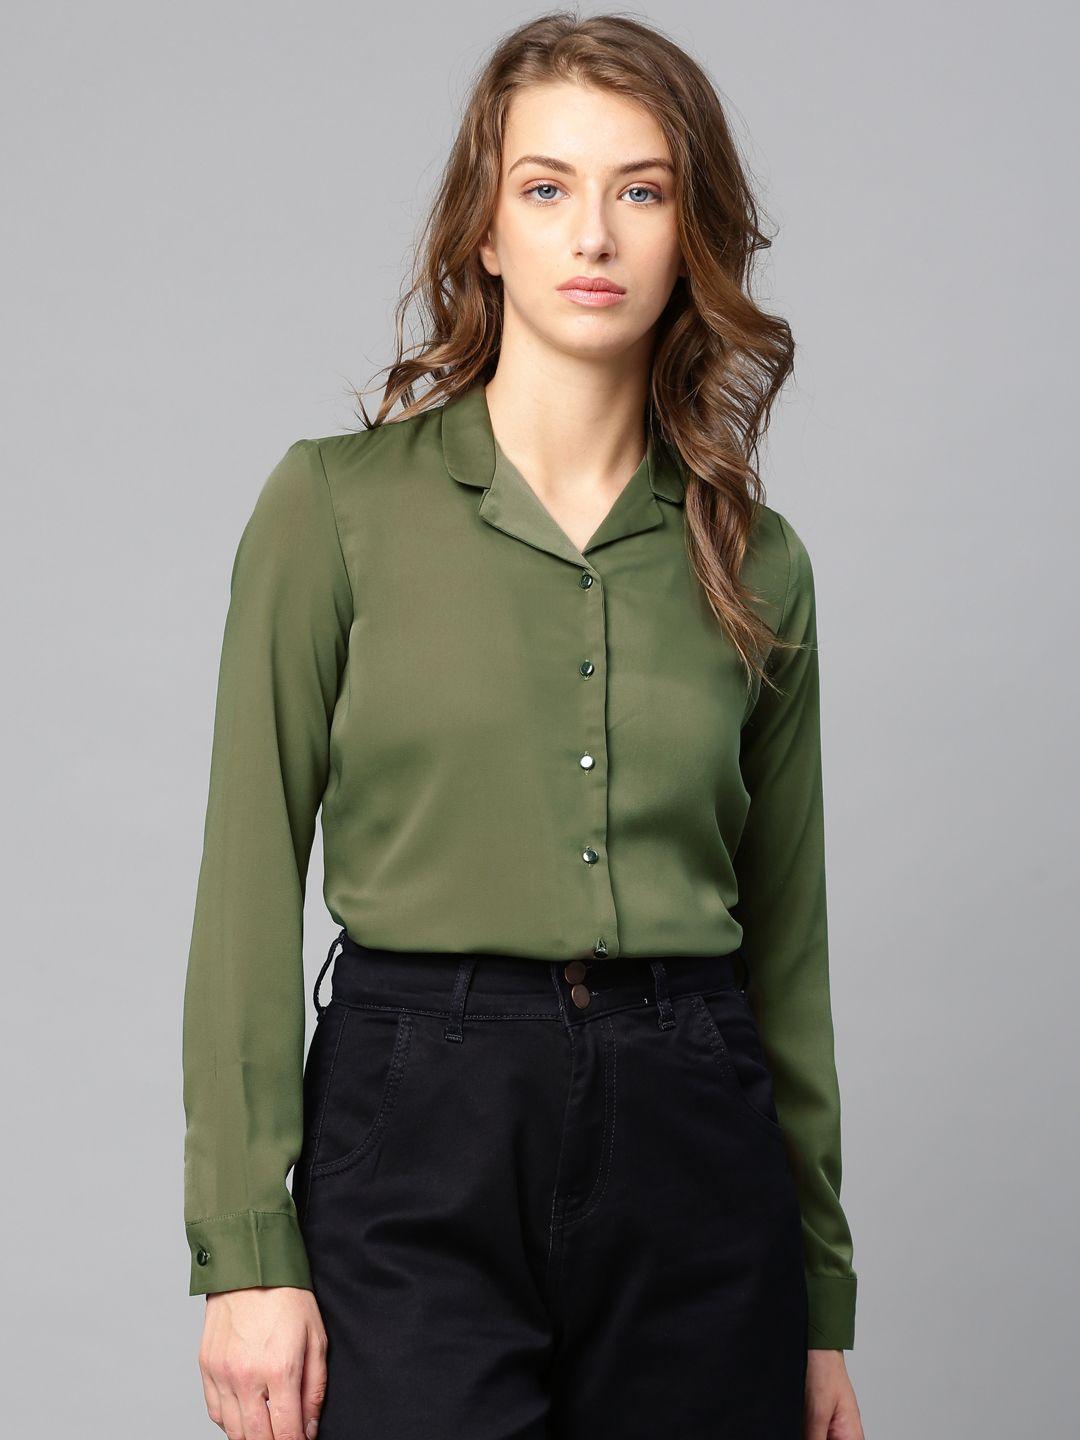 tokyo talkies women olive green regular fit solid casual shirt